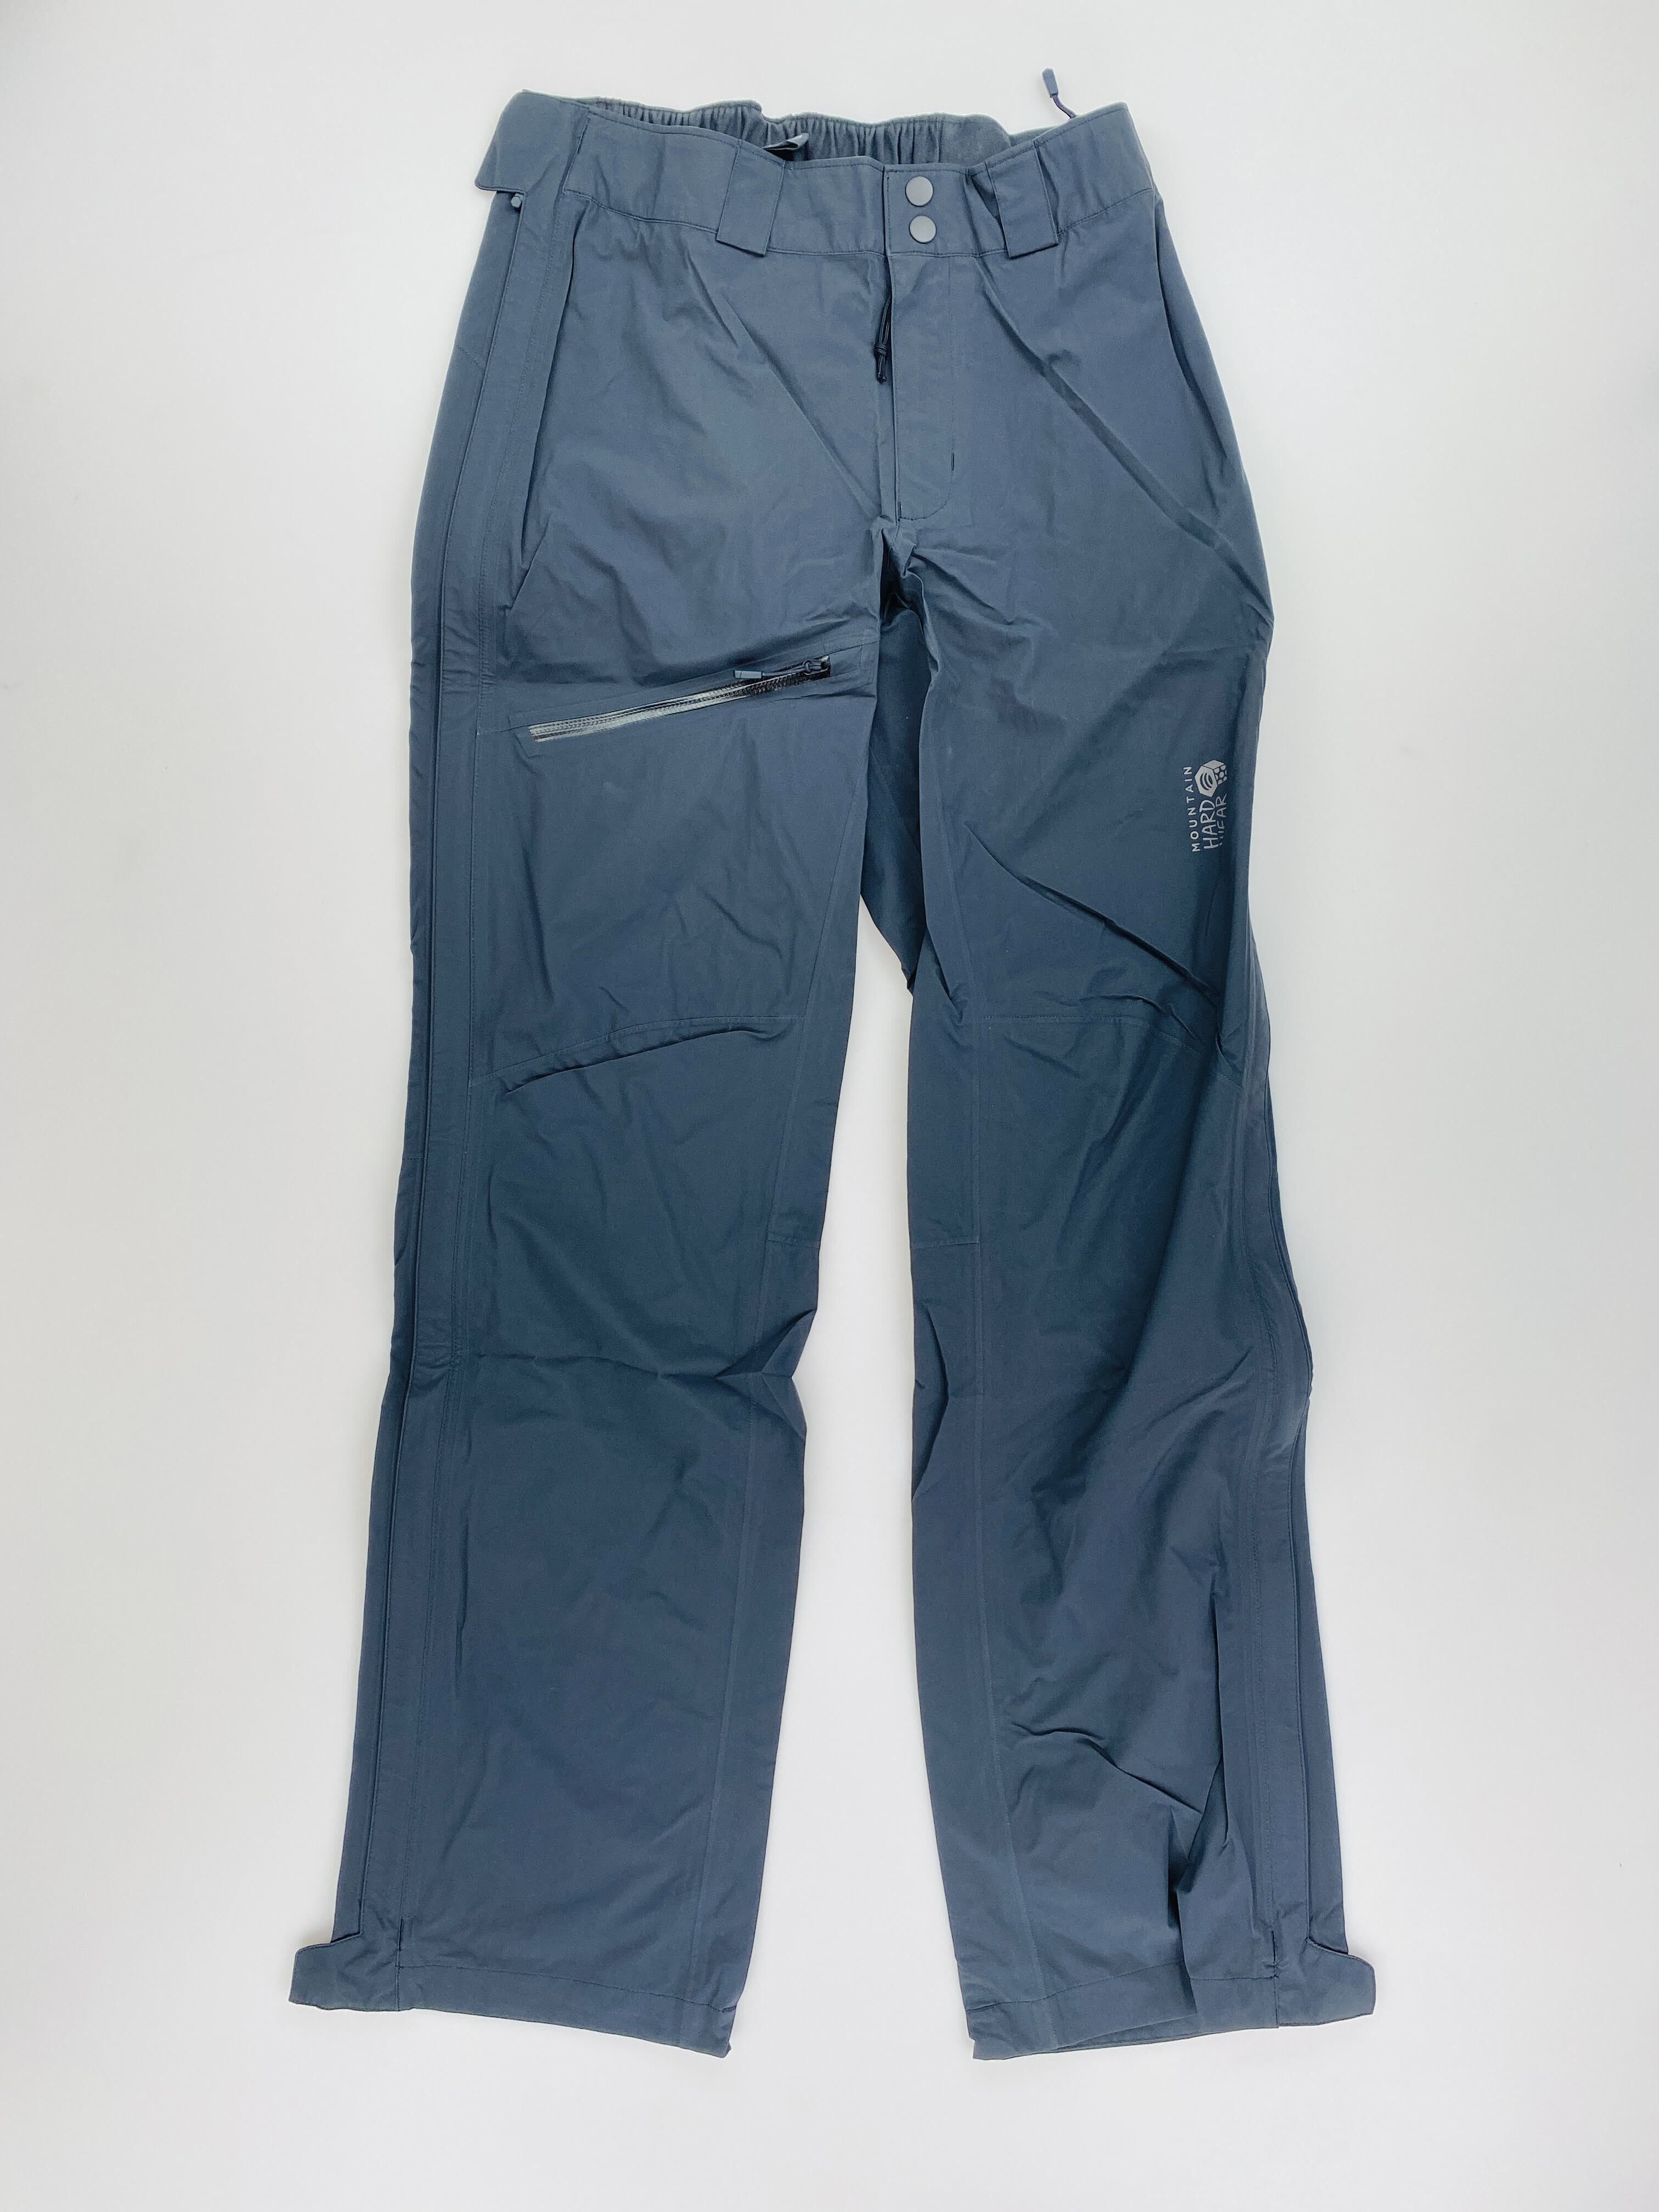 Mountain Hardwear Stretch Ozonic Woman Pant Regular - Seconde main Pantalon imperméable femme - Noir - S | Hardloop